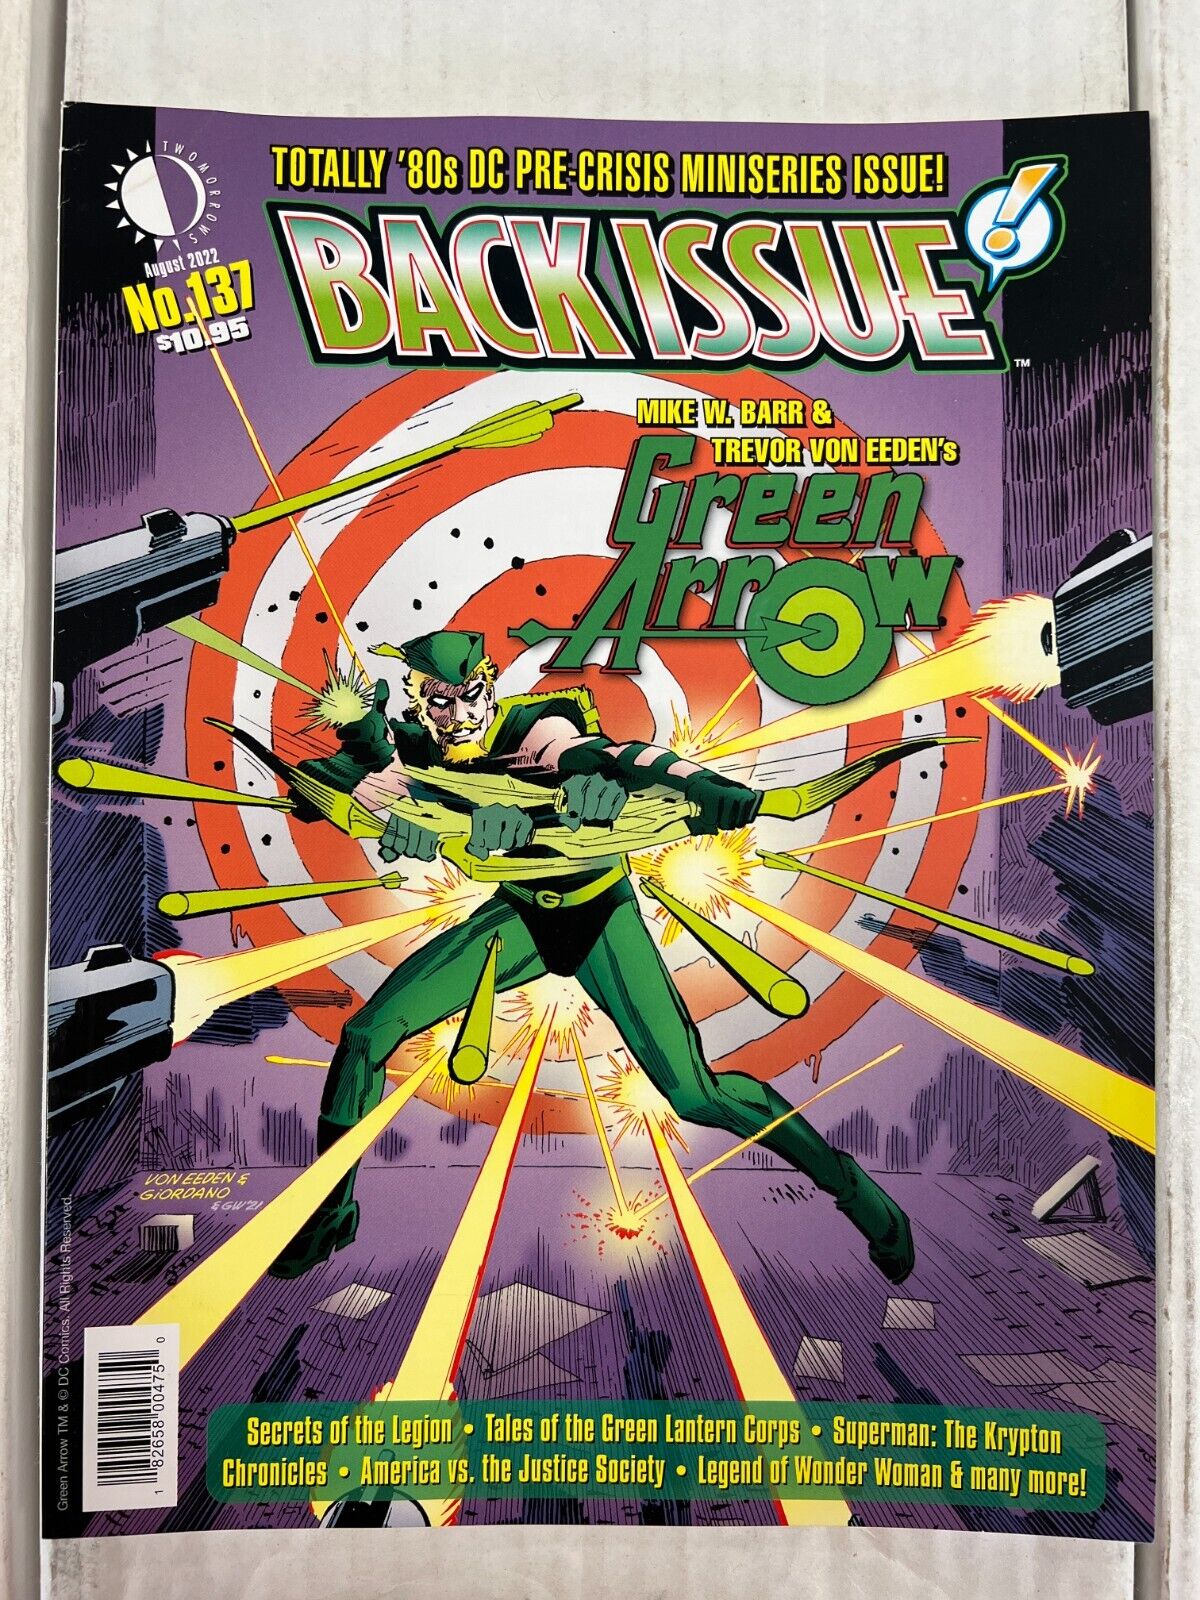 BACK ISSUE MAGAZINE #137 (VF NEW) 2022 TWOMORROWS - GREEN ARROW JSA SUPERMAN